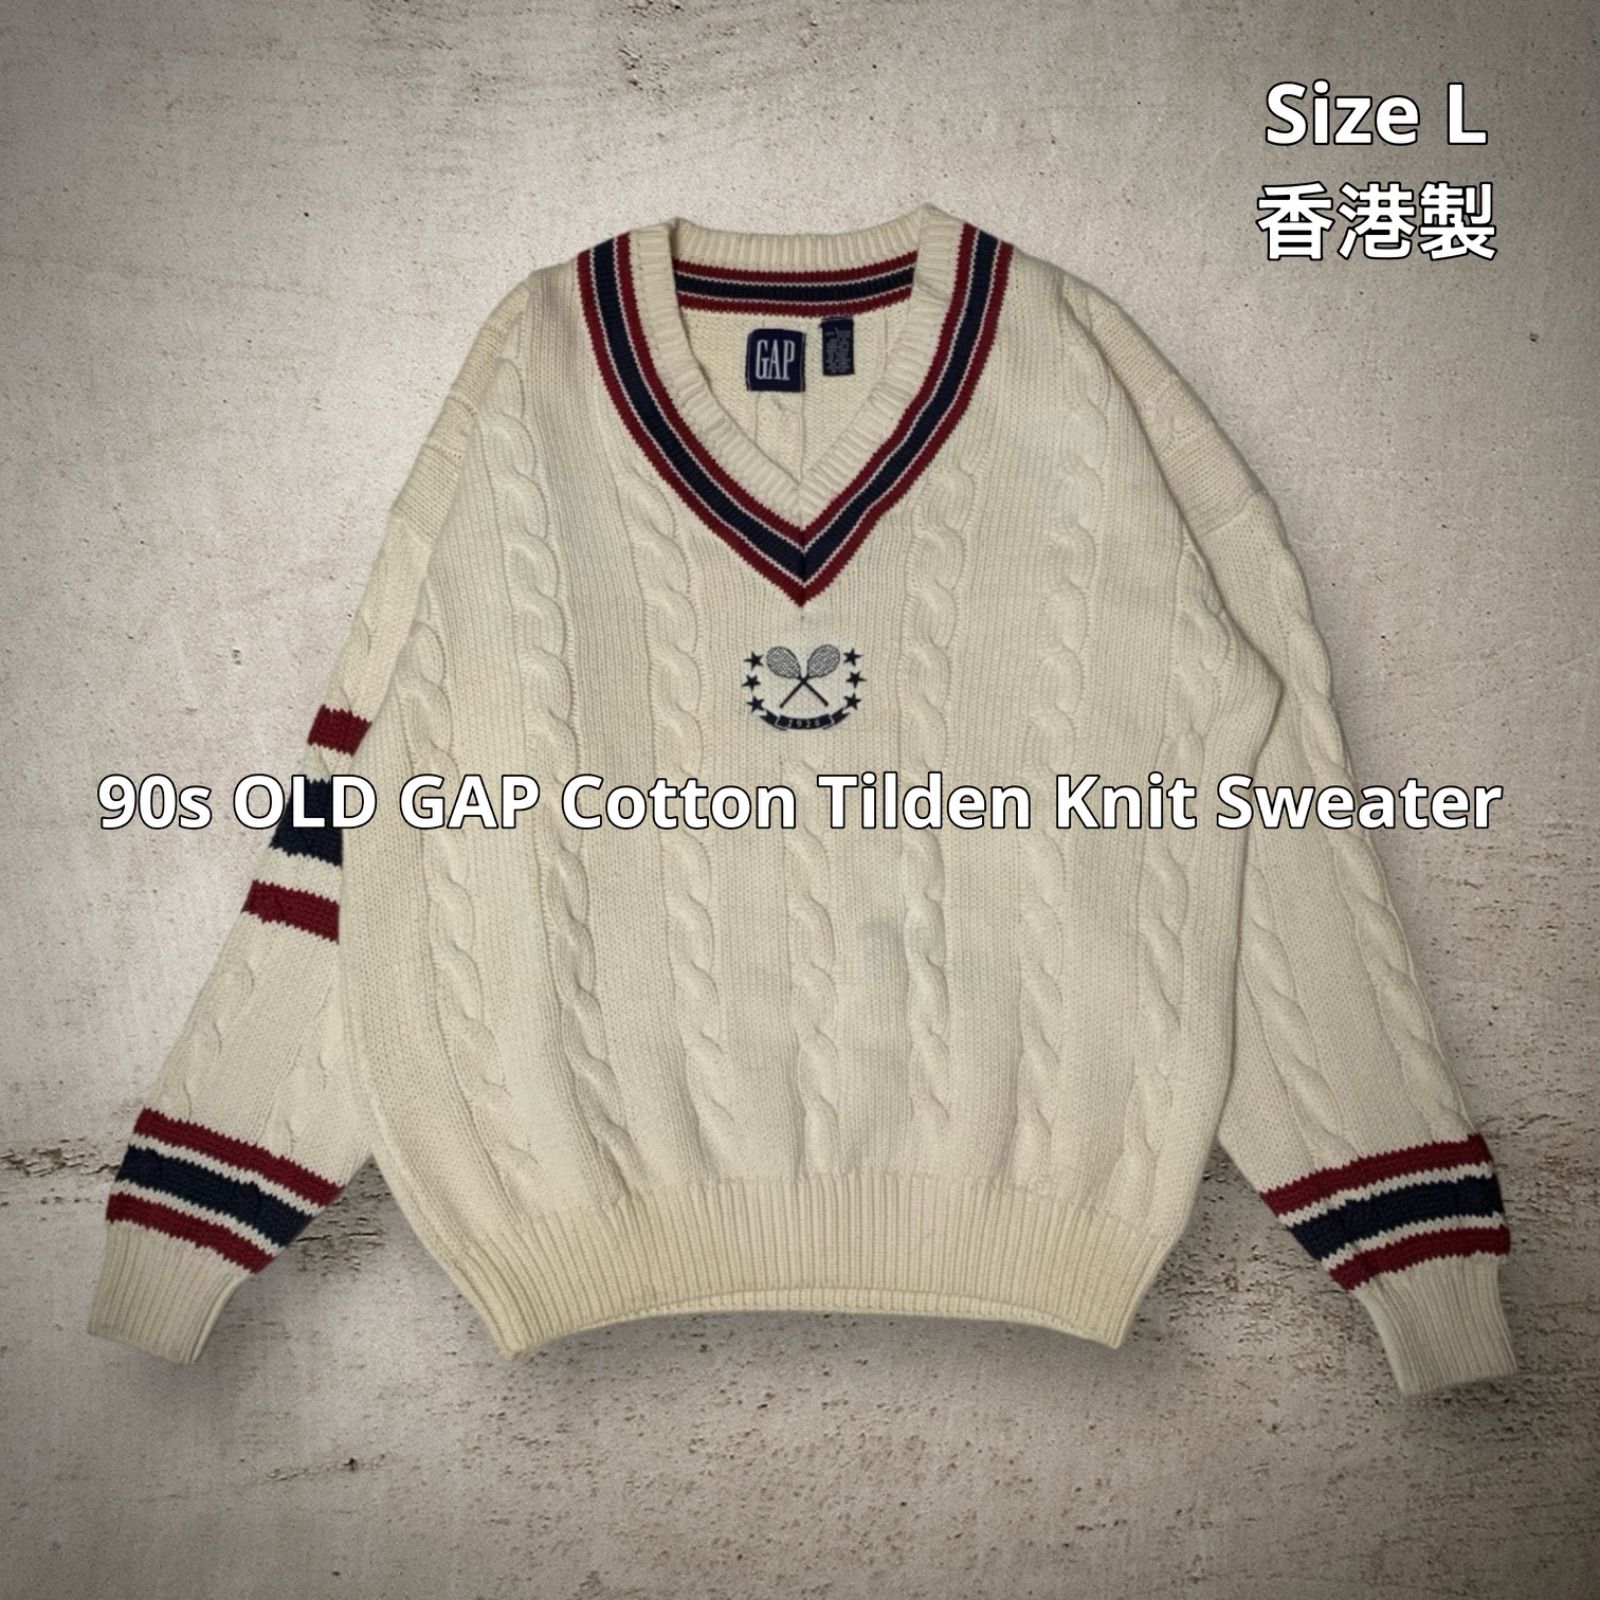 90s OLD GAP Cotton Tilden Knit Sweater オールドギャップ チルデンニットセーター コットンニット ホワイト  レッド ネイビー Lサイズ 香港製 刺繍 アシンメトリー オーバーサイズ 肉厚 コットン100%